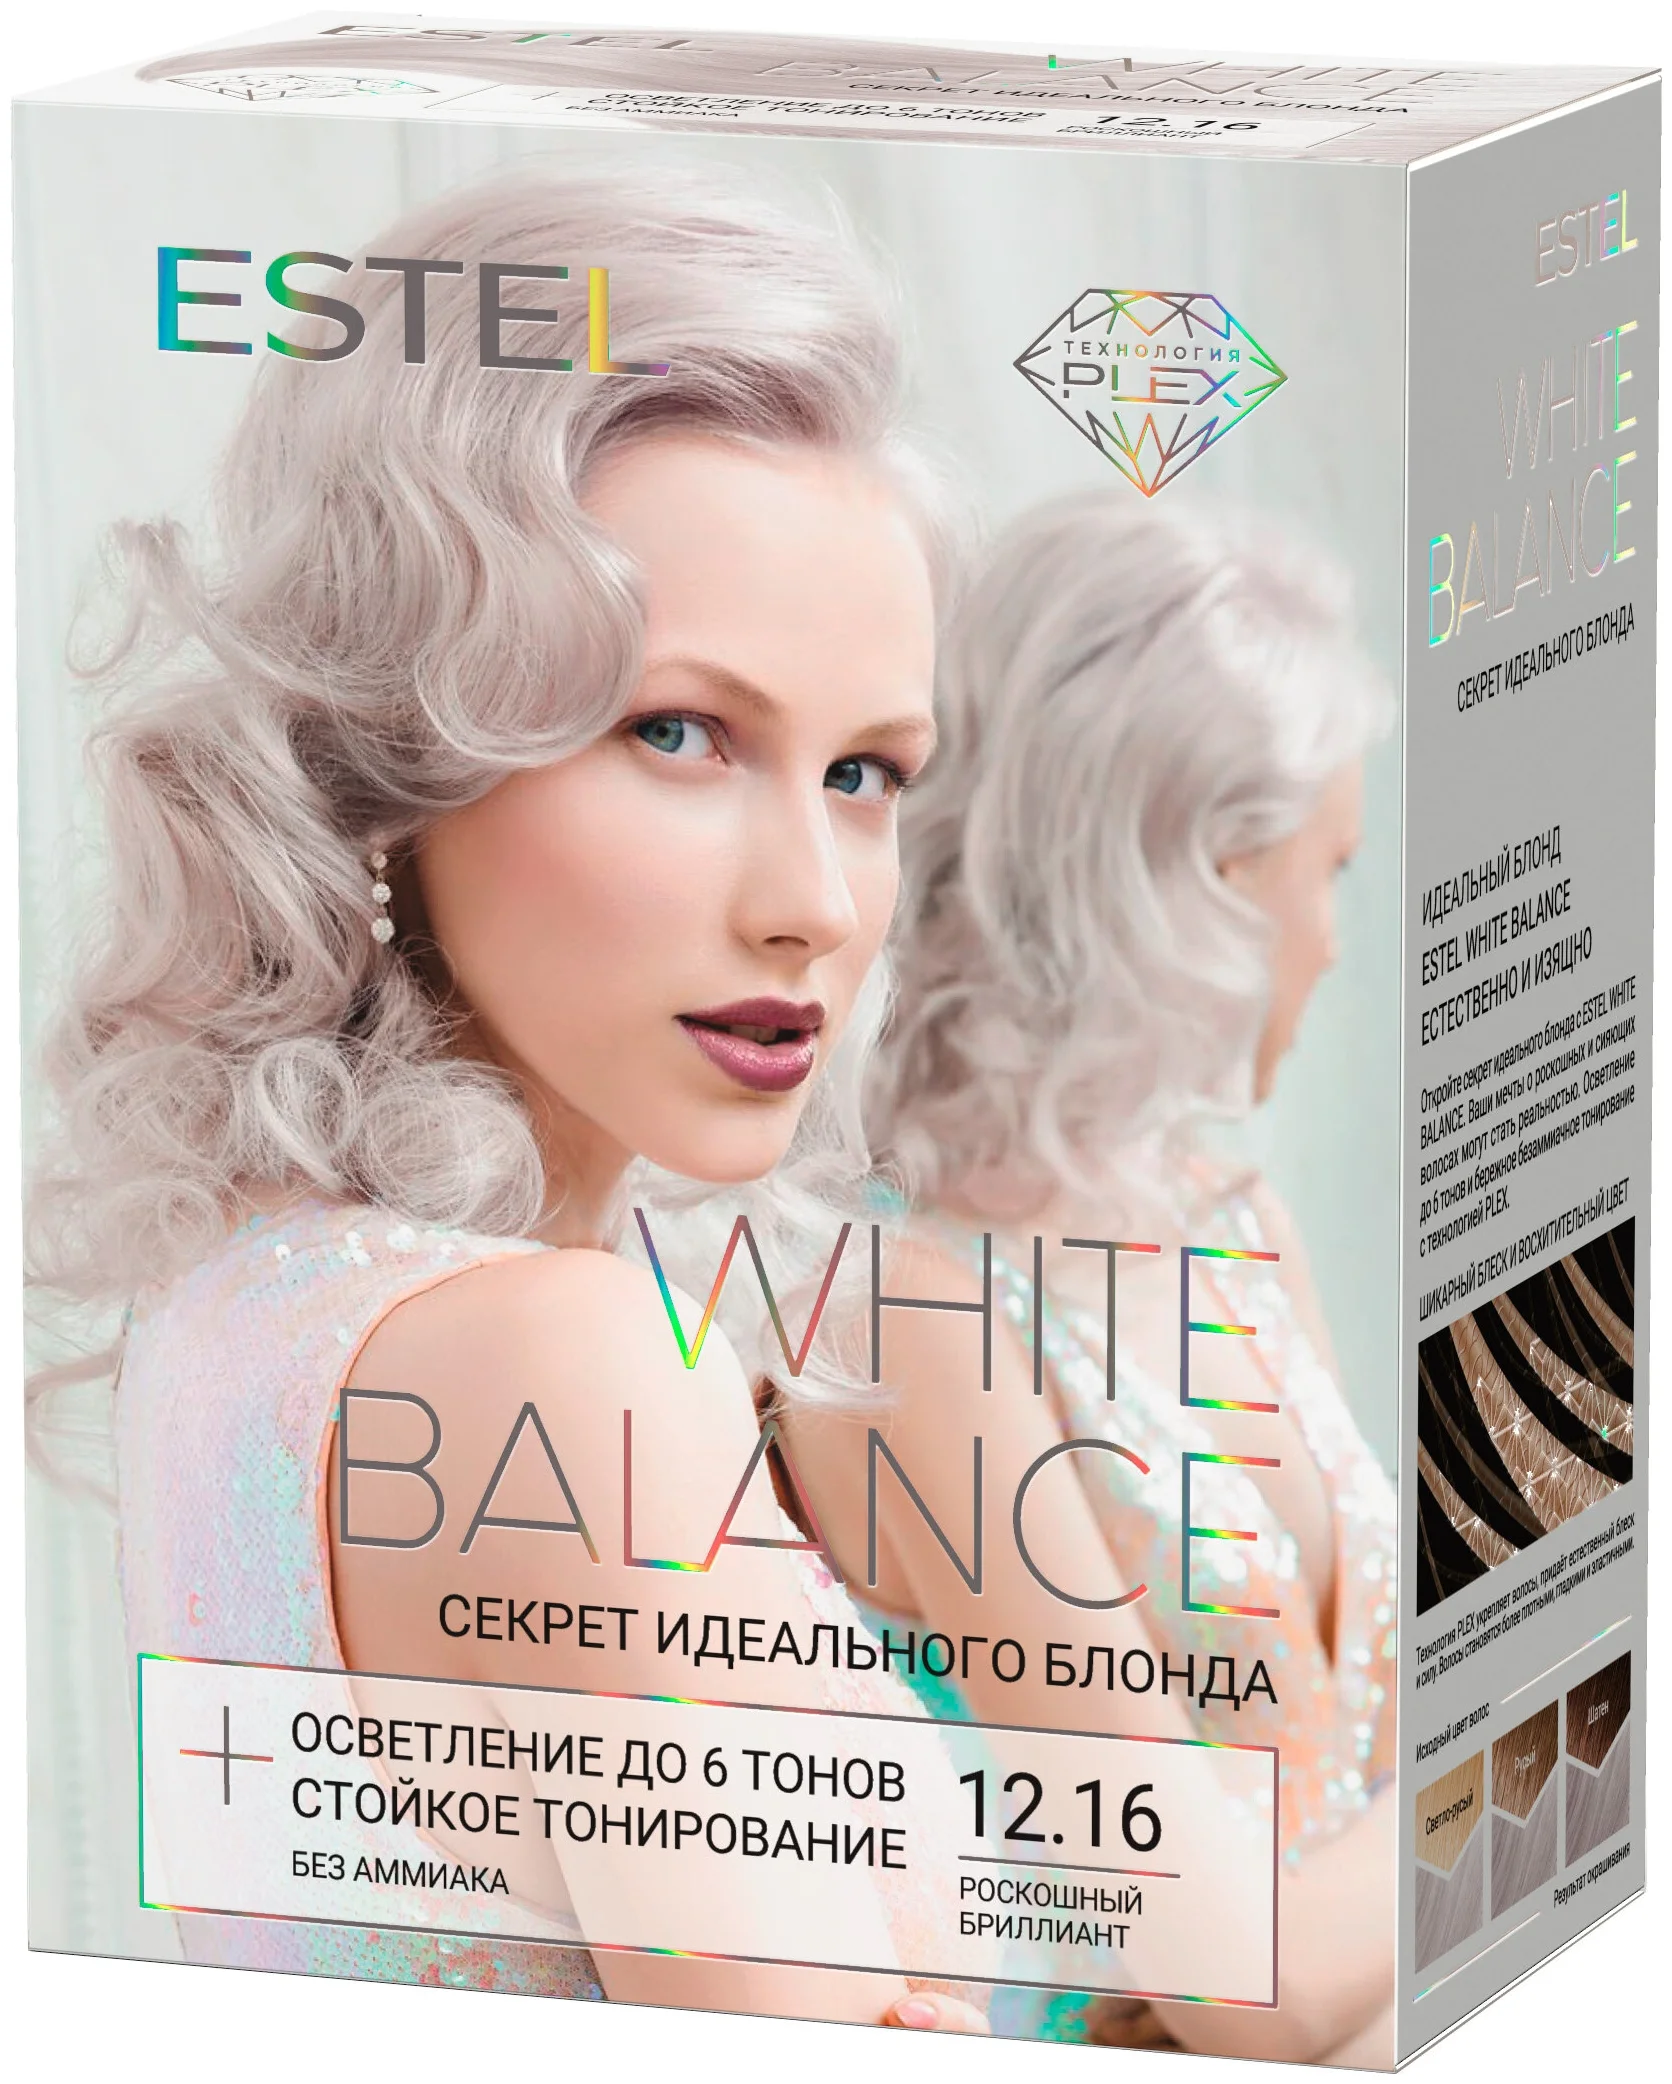 ESTEL "White balance" - текстура: крем